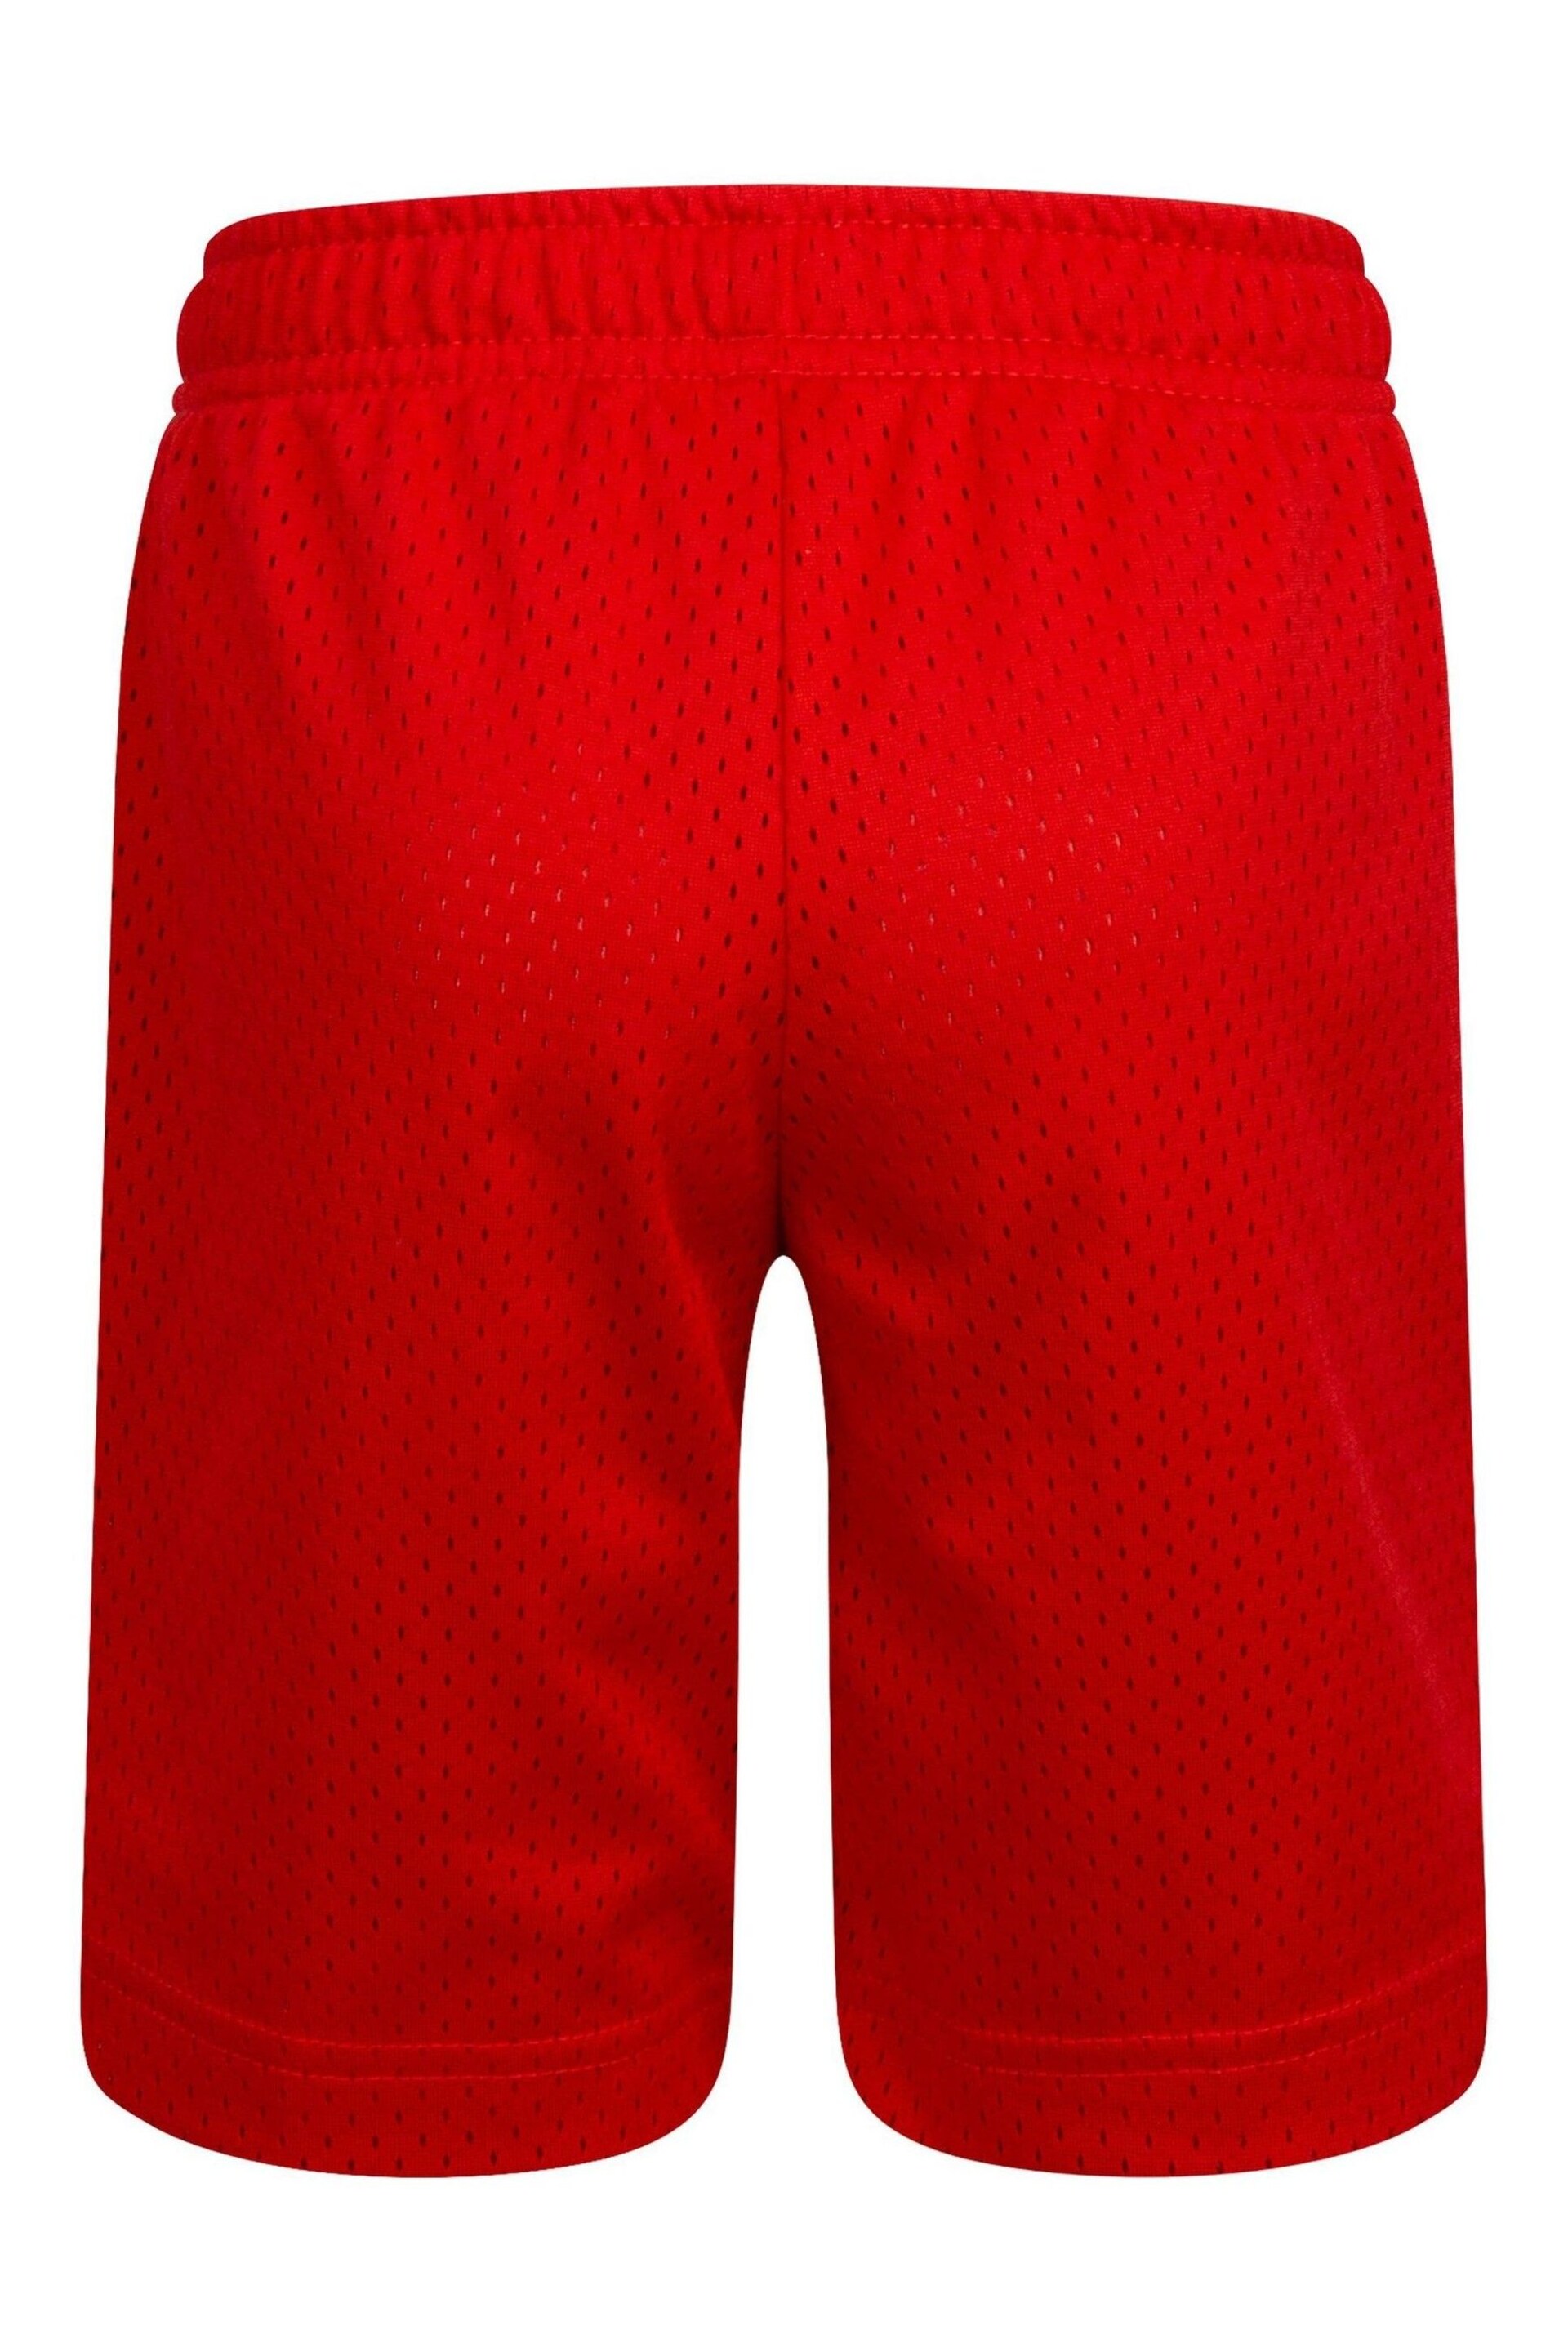 Nike Red Mesh Little Kids Shorts - Image 2 of 4